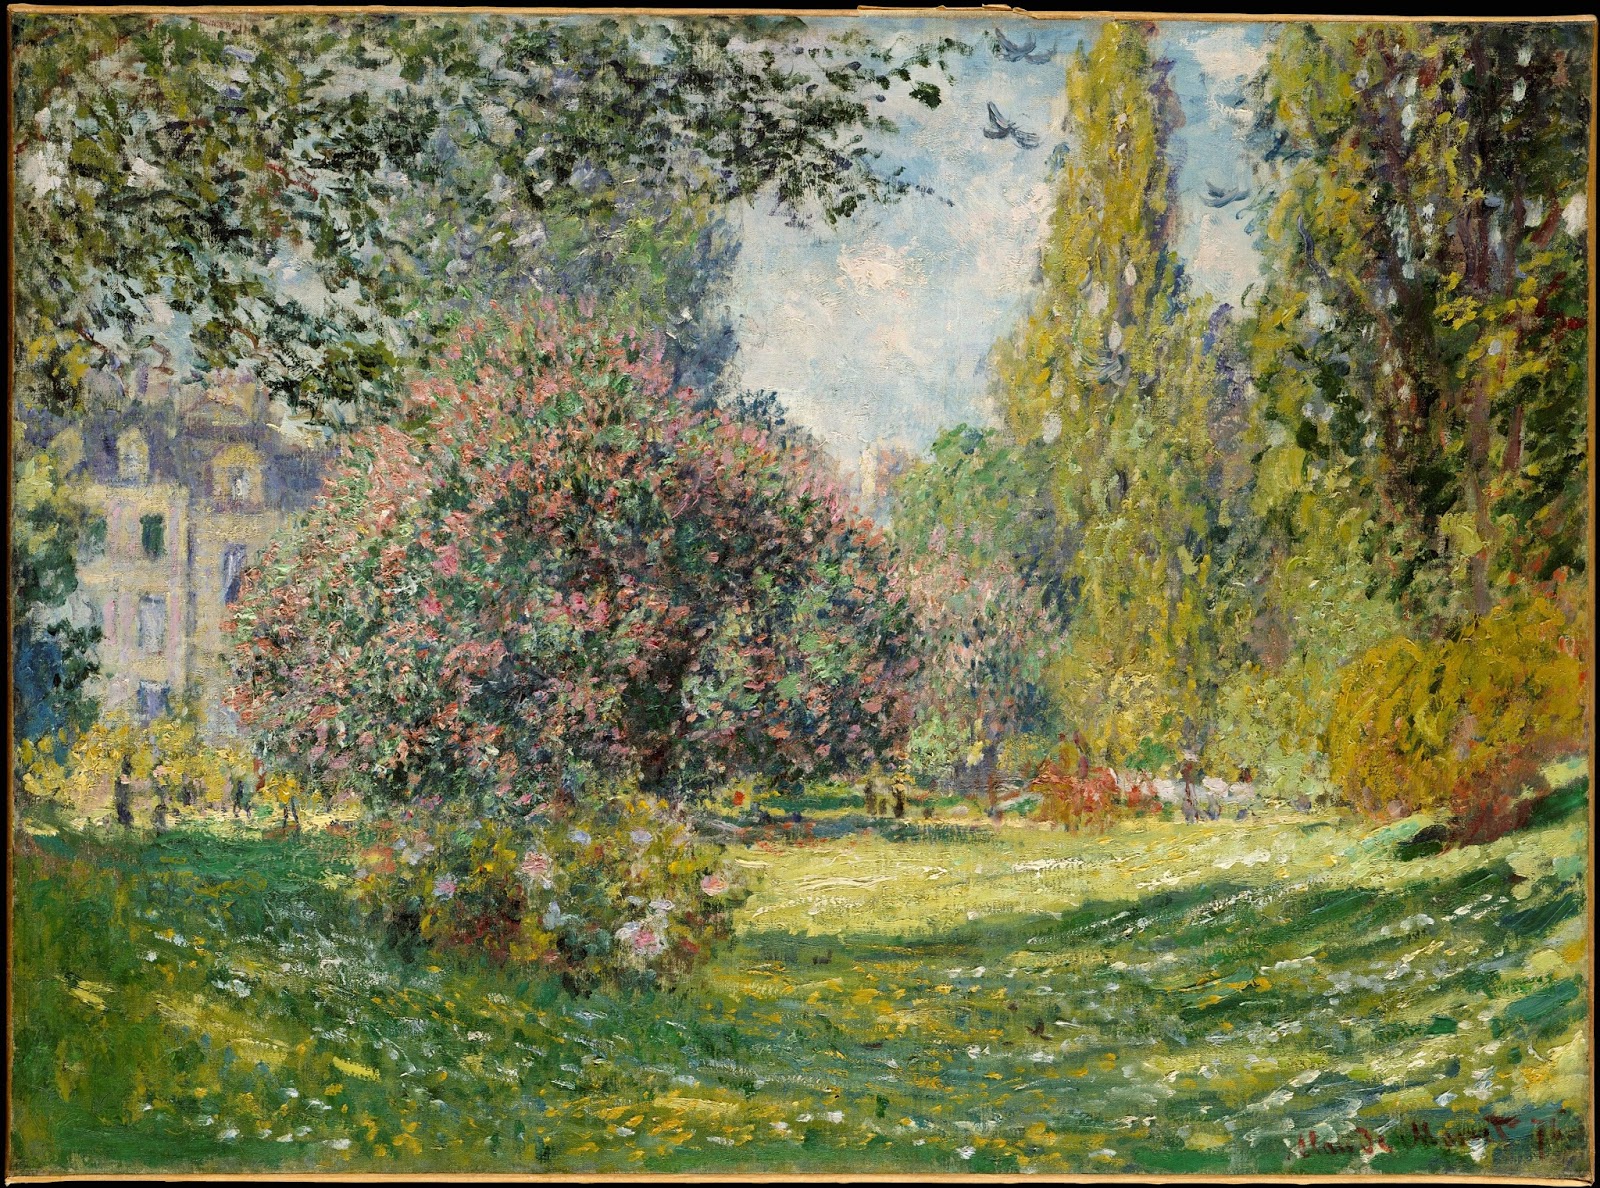 Claude+Monet-1840-1926 (783).jpg